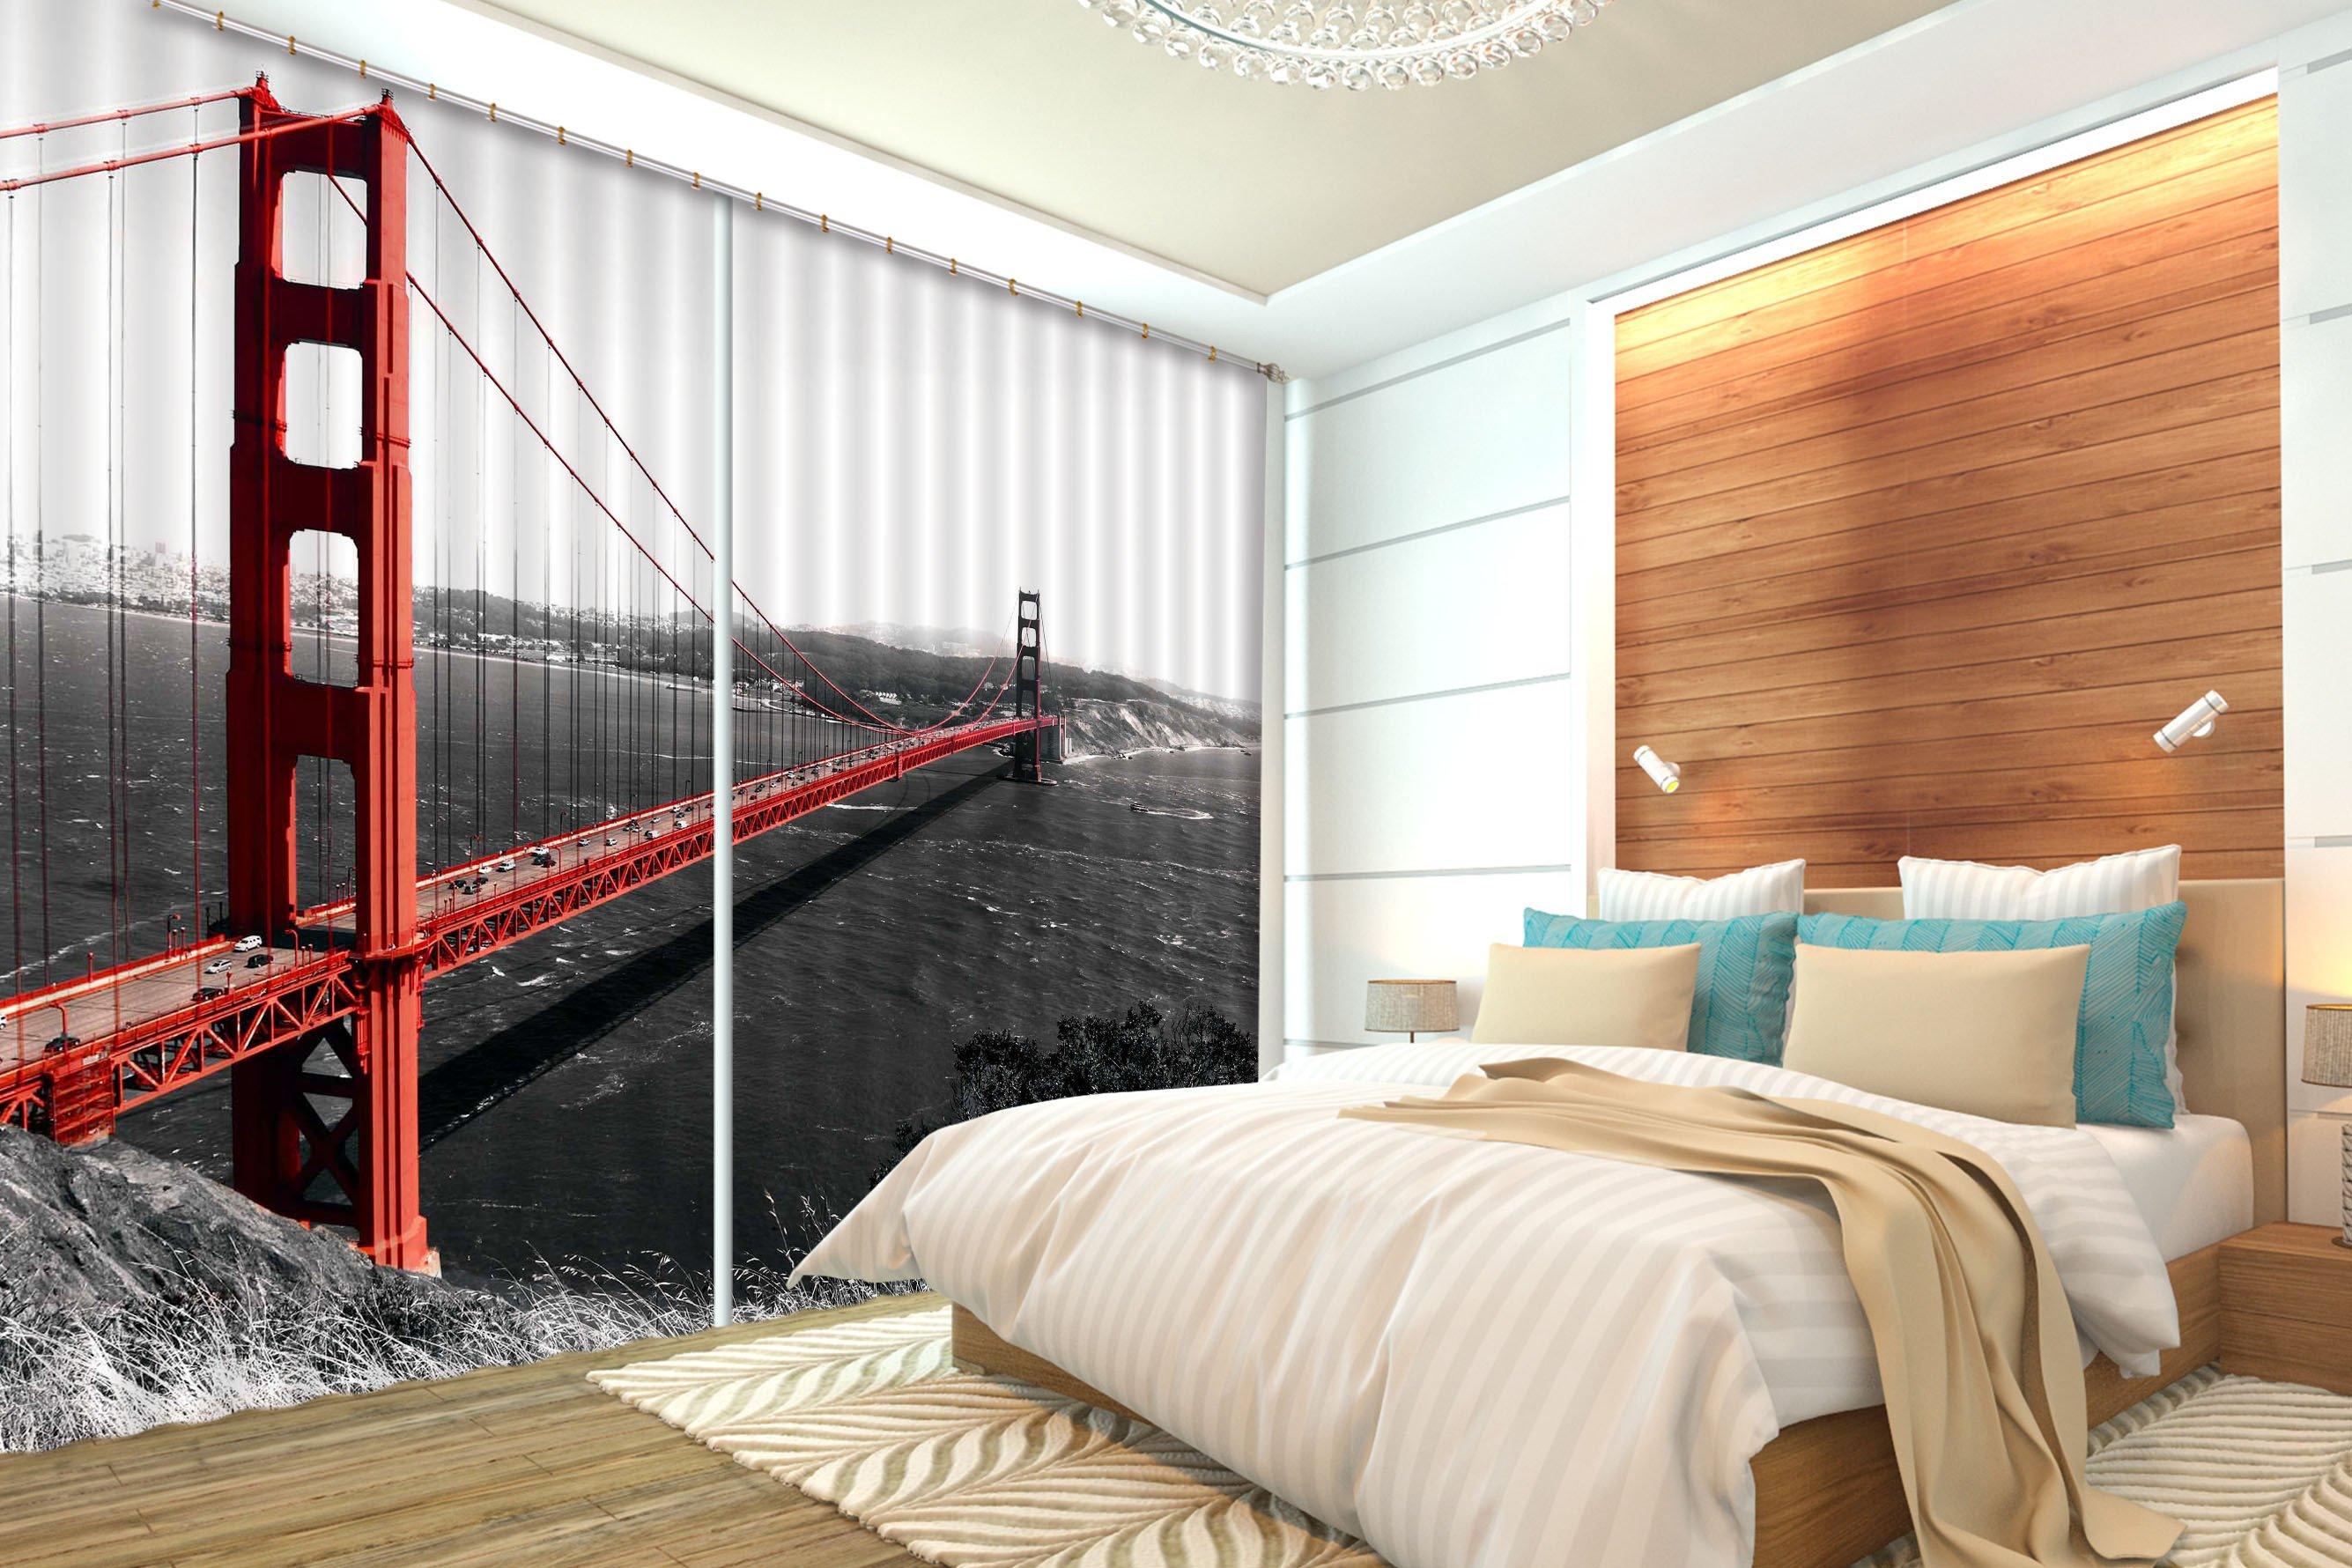 3D Golden Gate Bridge 494 Curtains Drapes Wallpaper AJ Wallpaper 